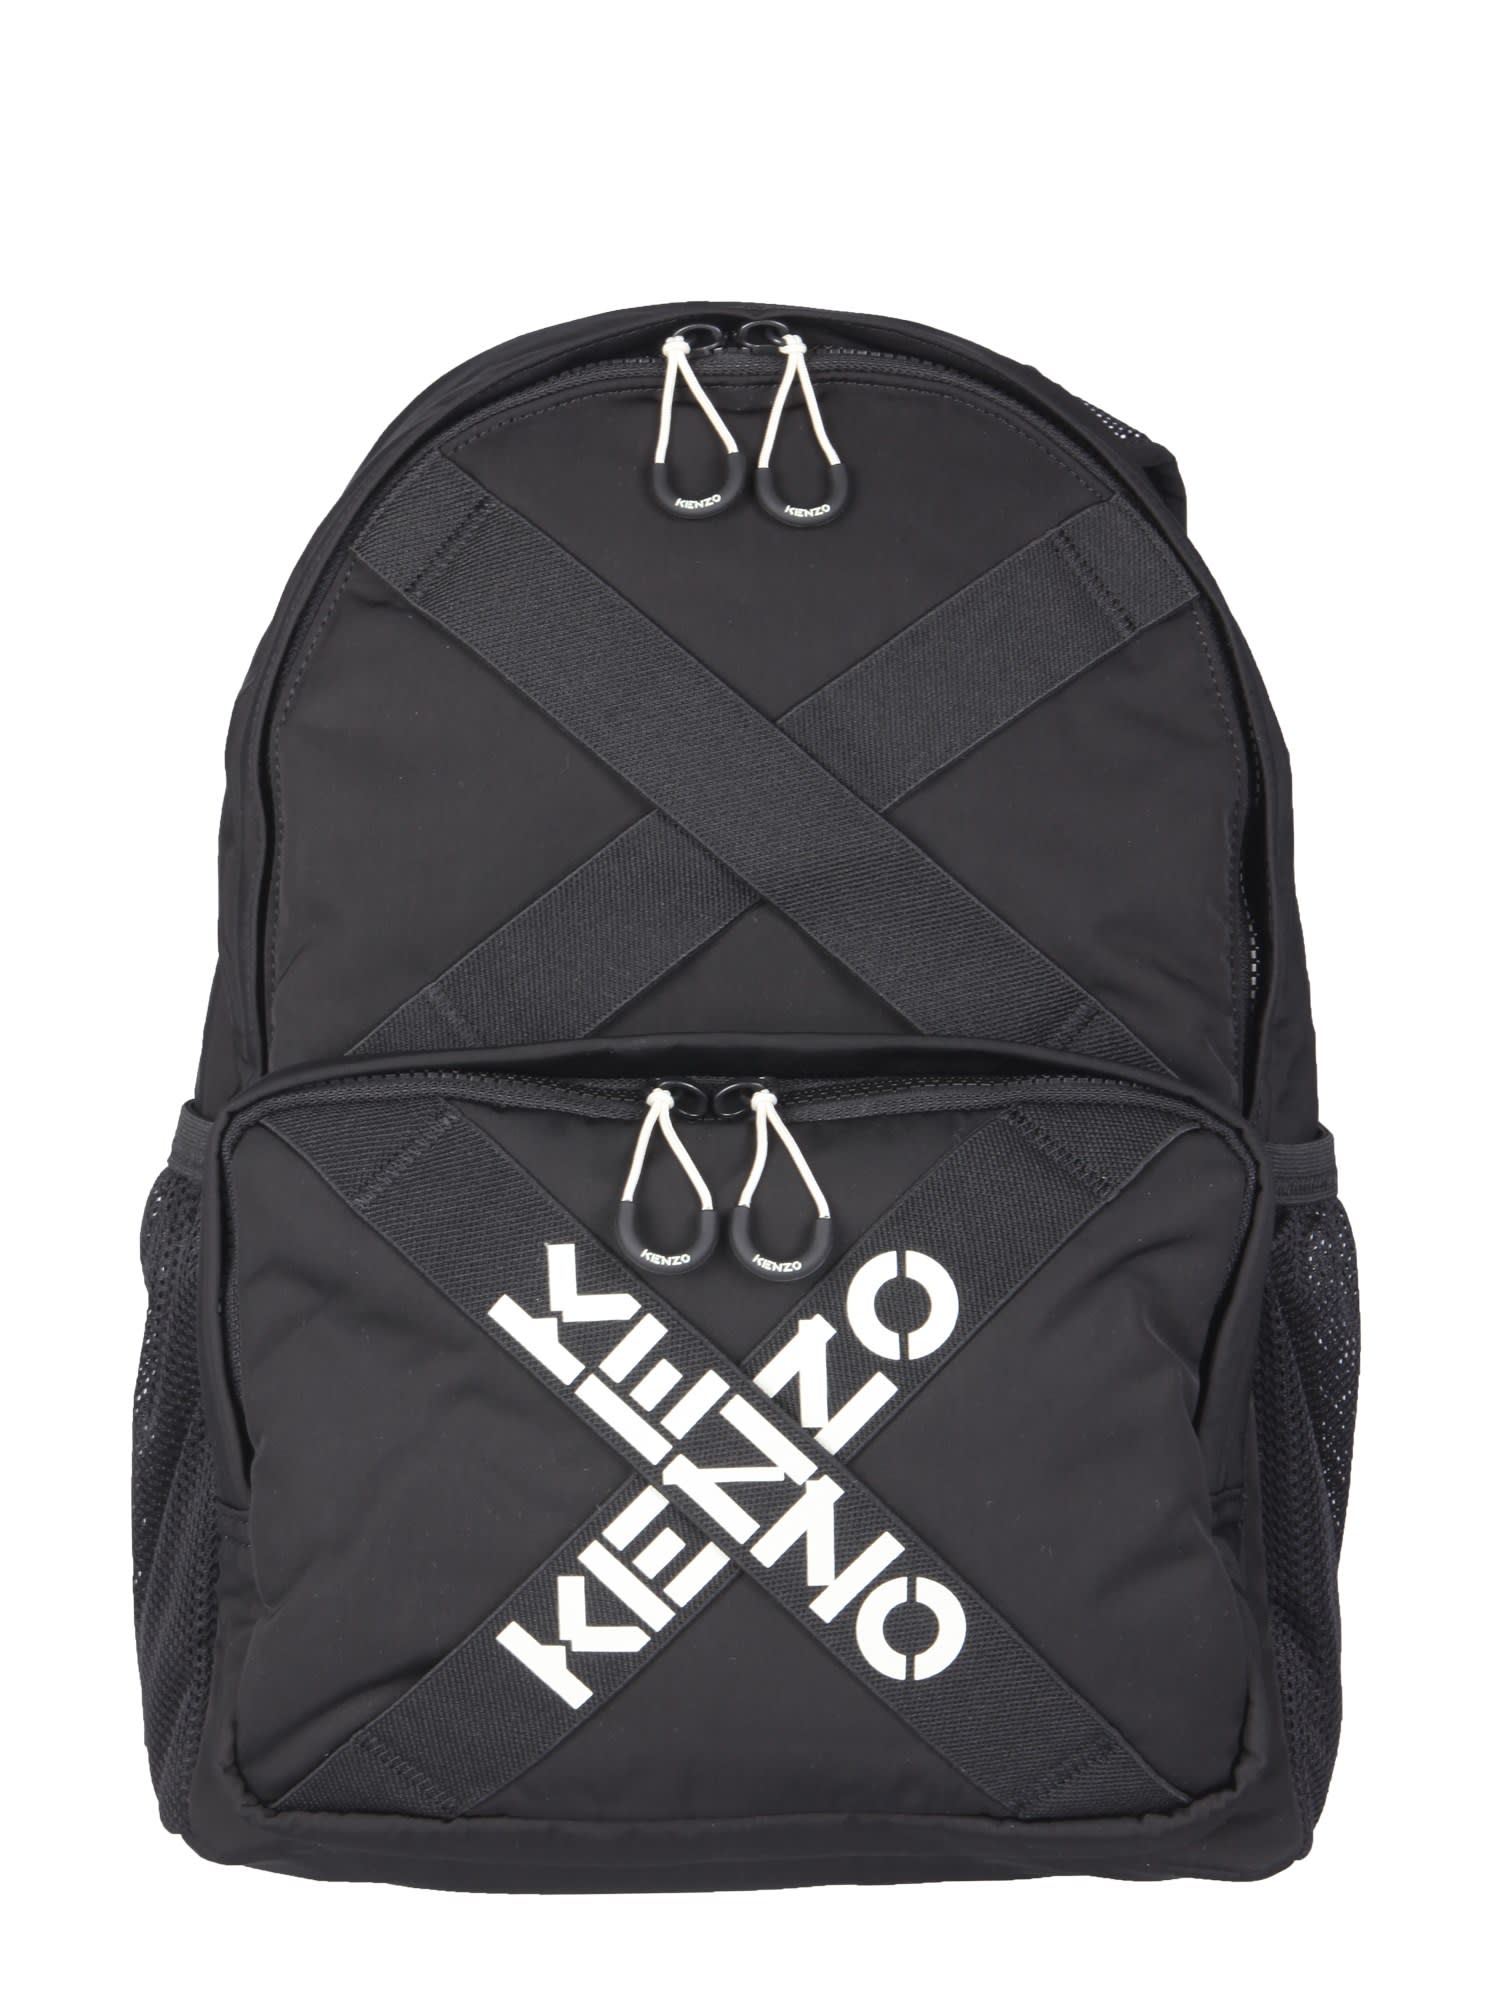 KENZO Backpacks | ModeSens